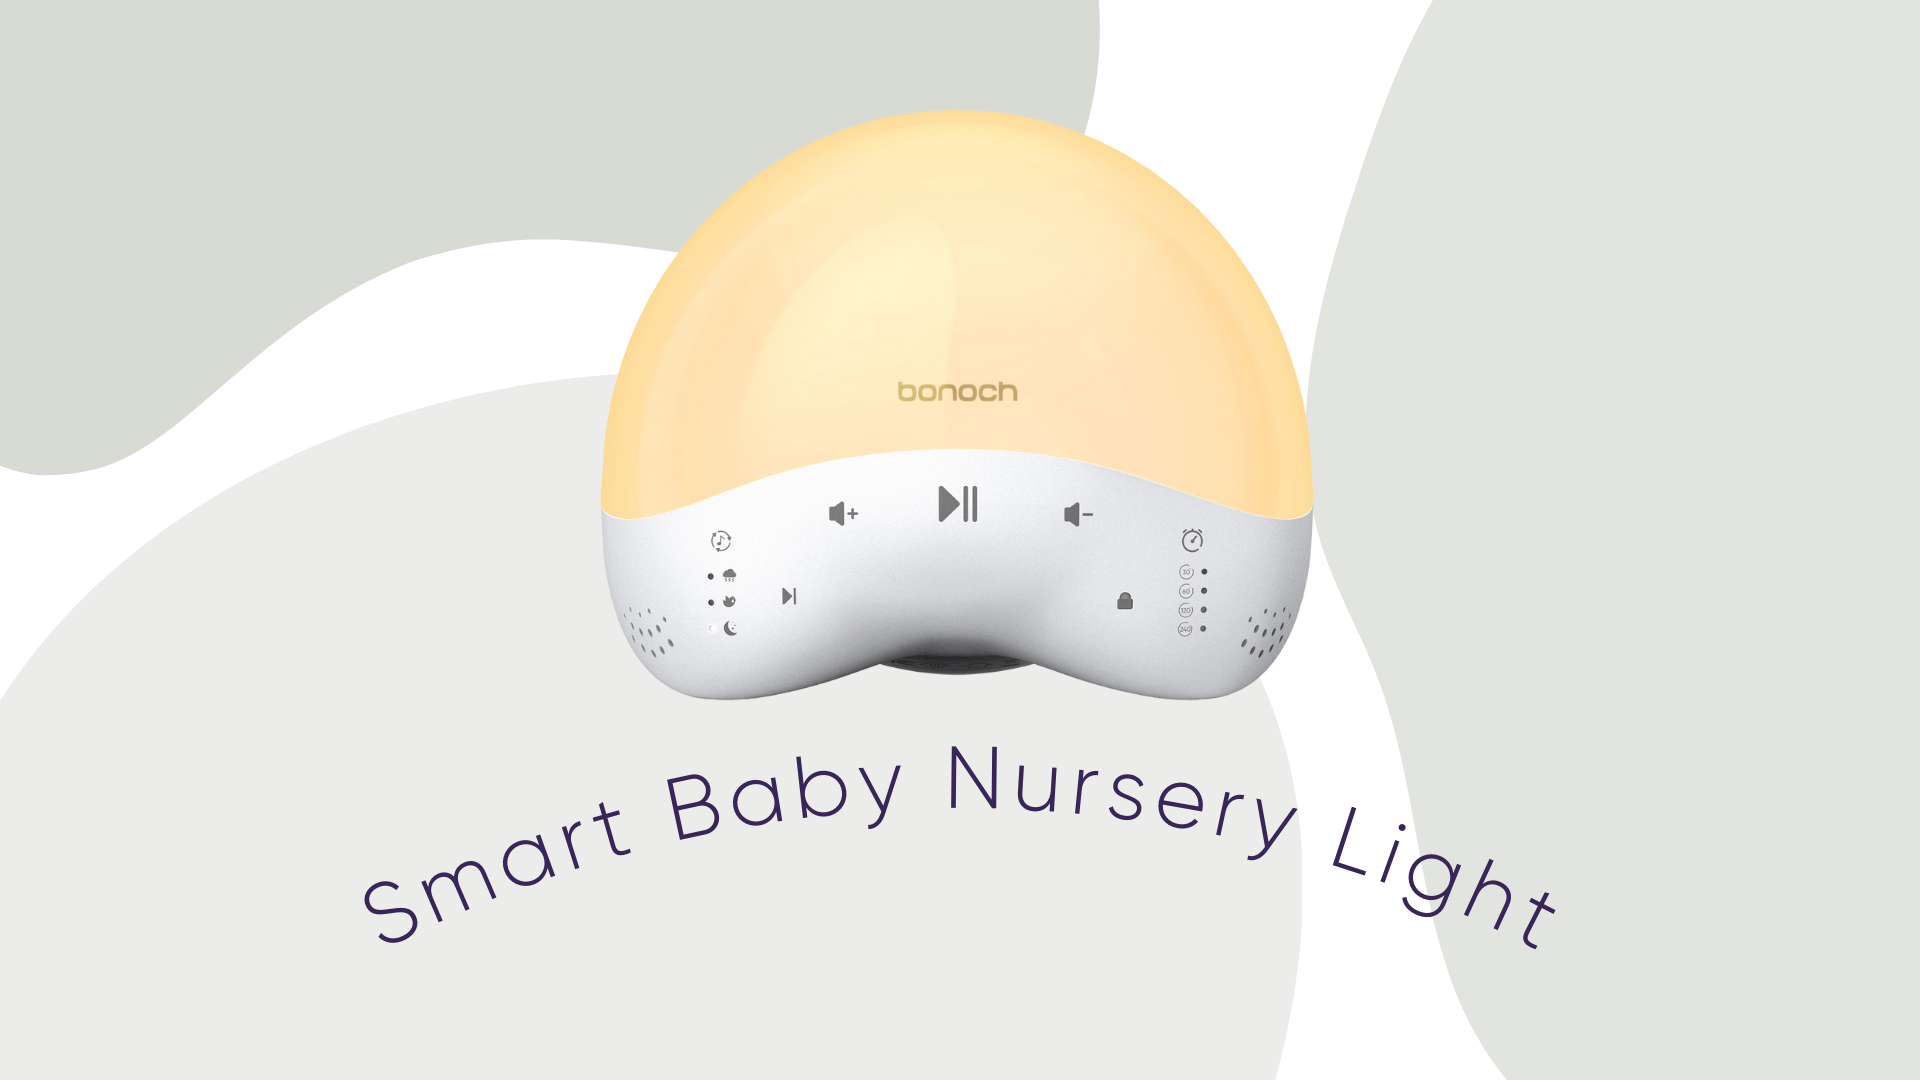 bonoch Baby Smart Nursery Light